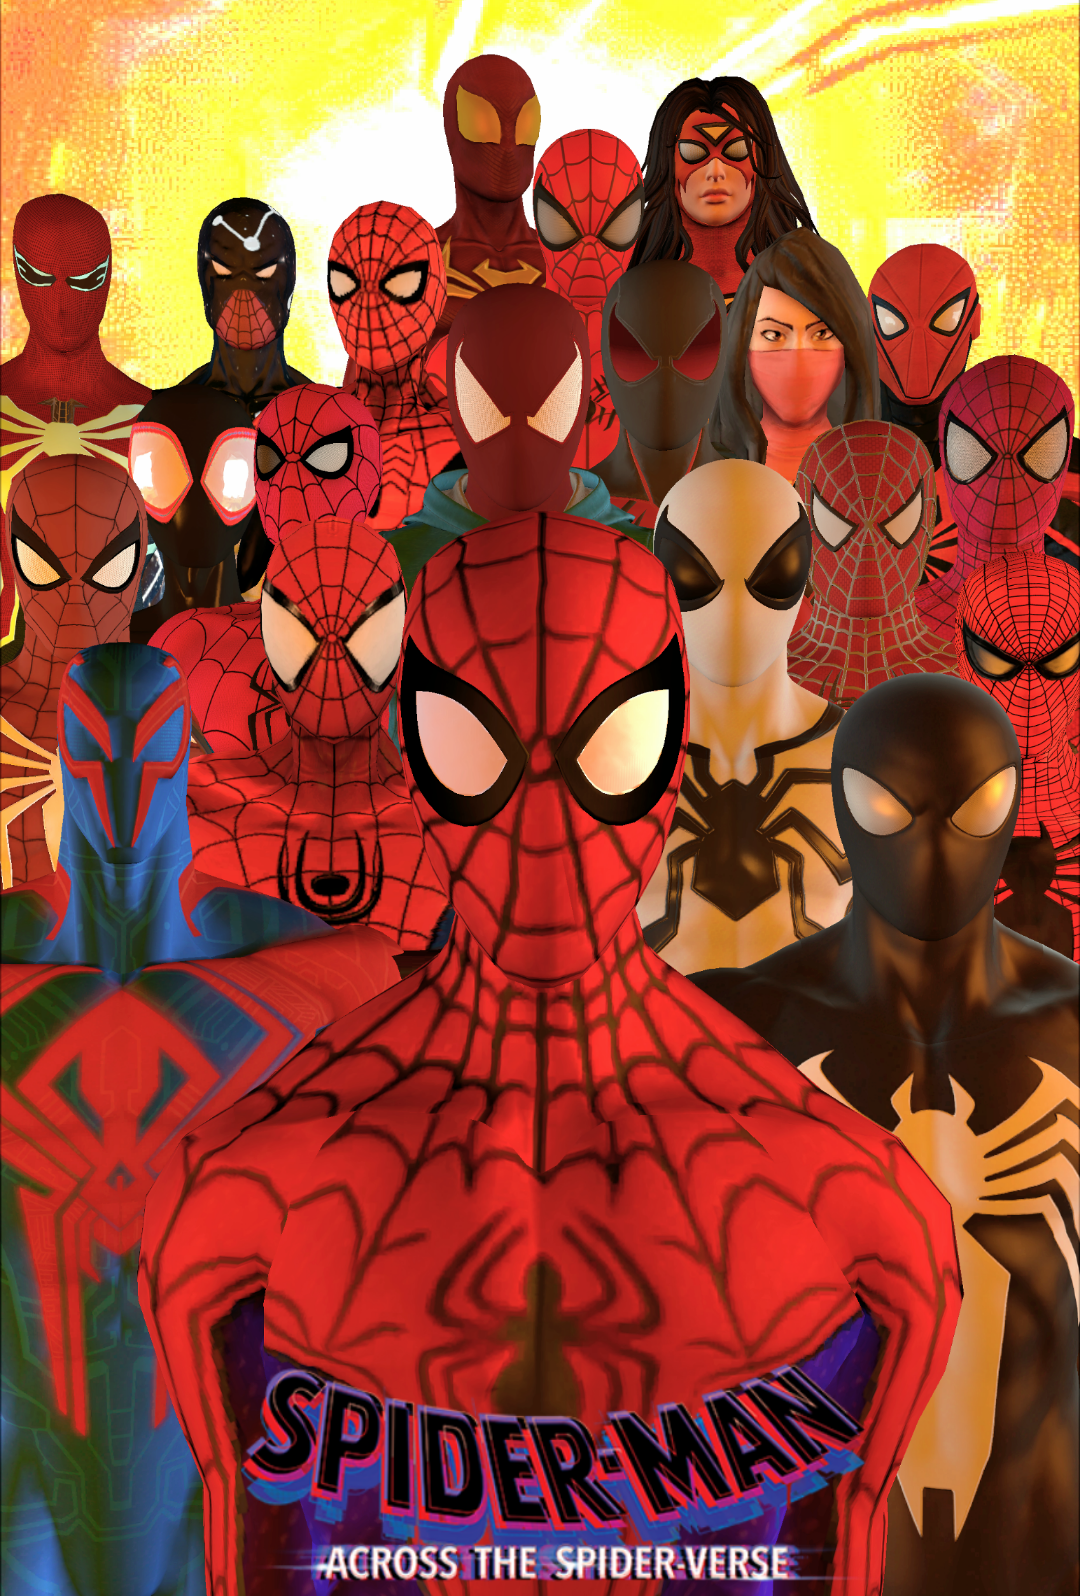 Spiderman across the spider verse poster by artoflegion56 on DeviantArt